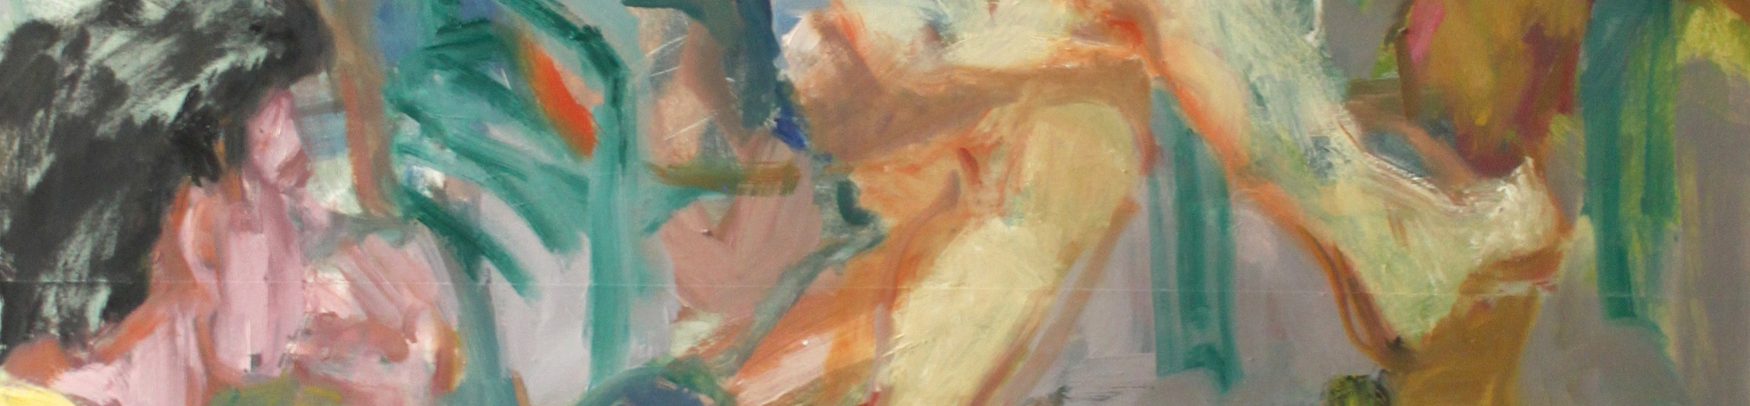 Rachel Mercer Radiate and Absorb Oilon Canvas 100x120 July 22